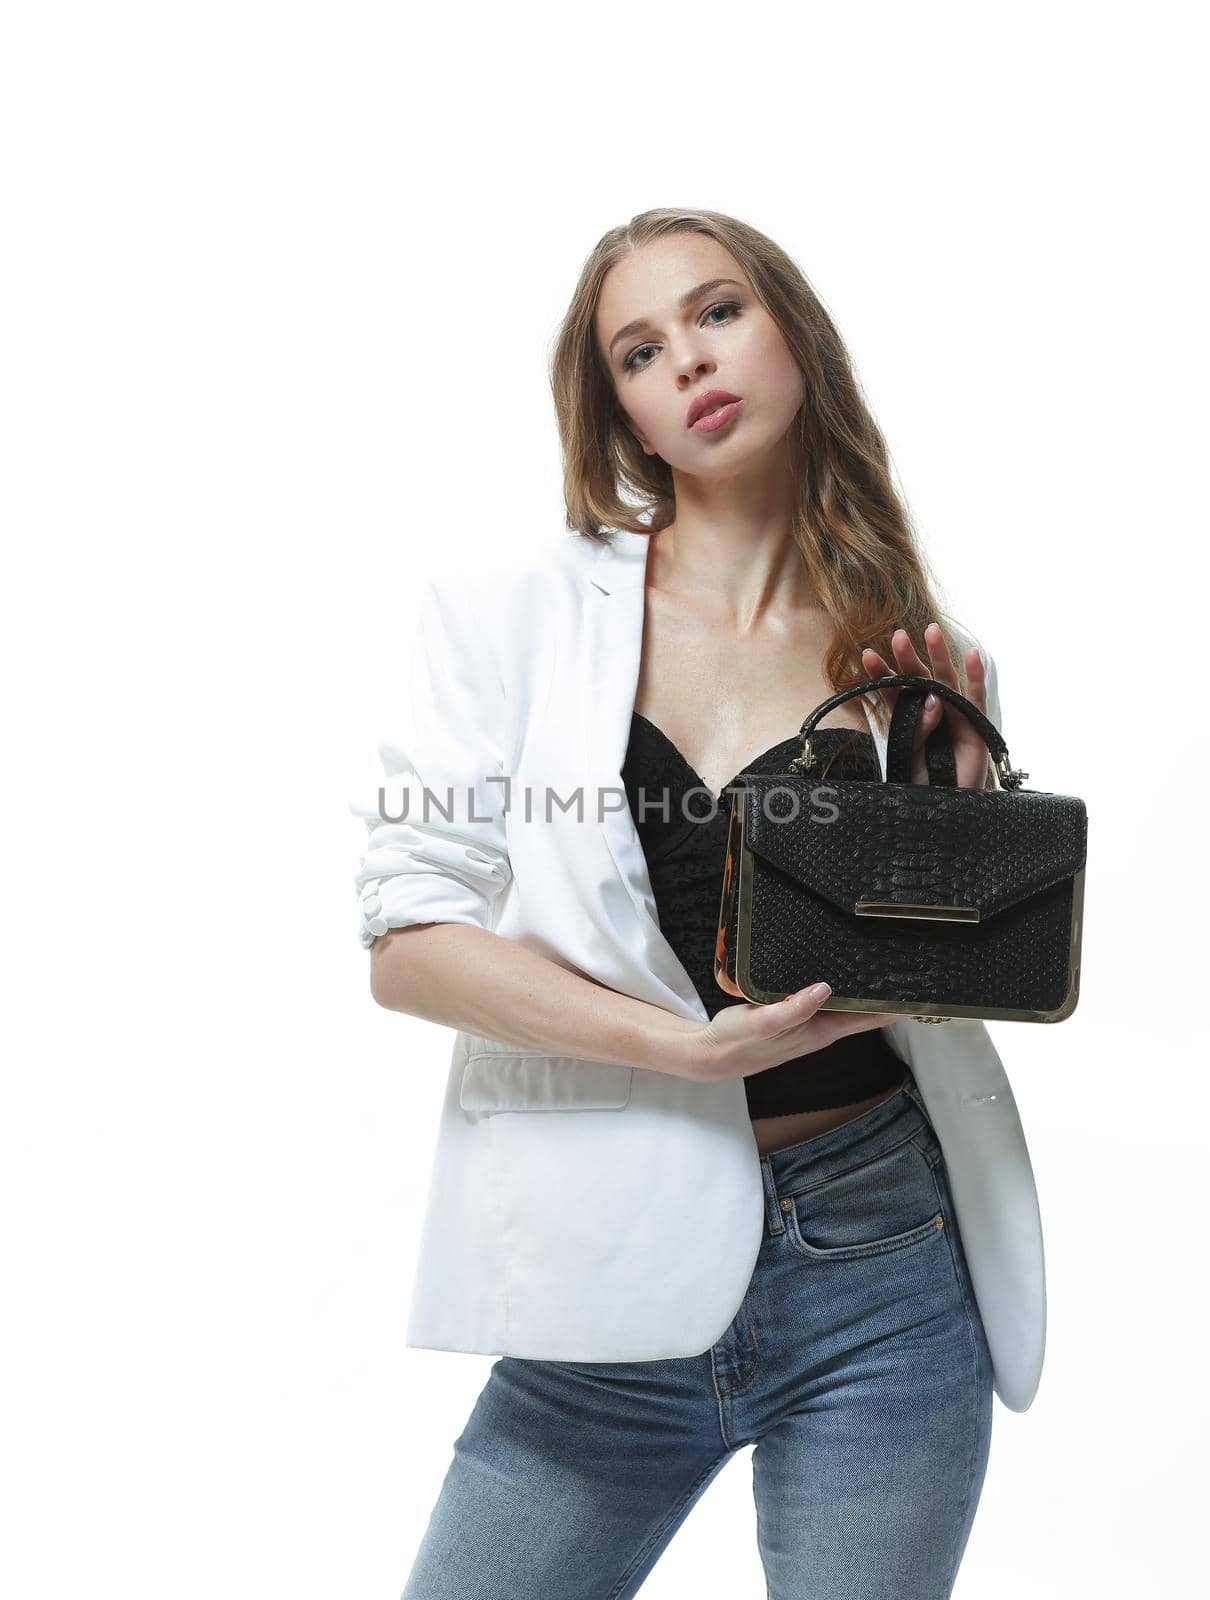 stylish young woman with fashionable handbag.isolated on white.